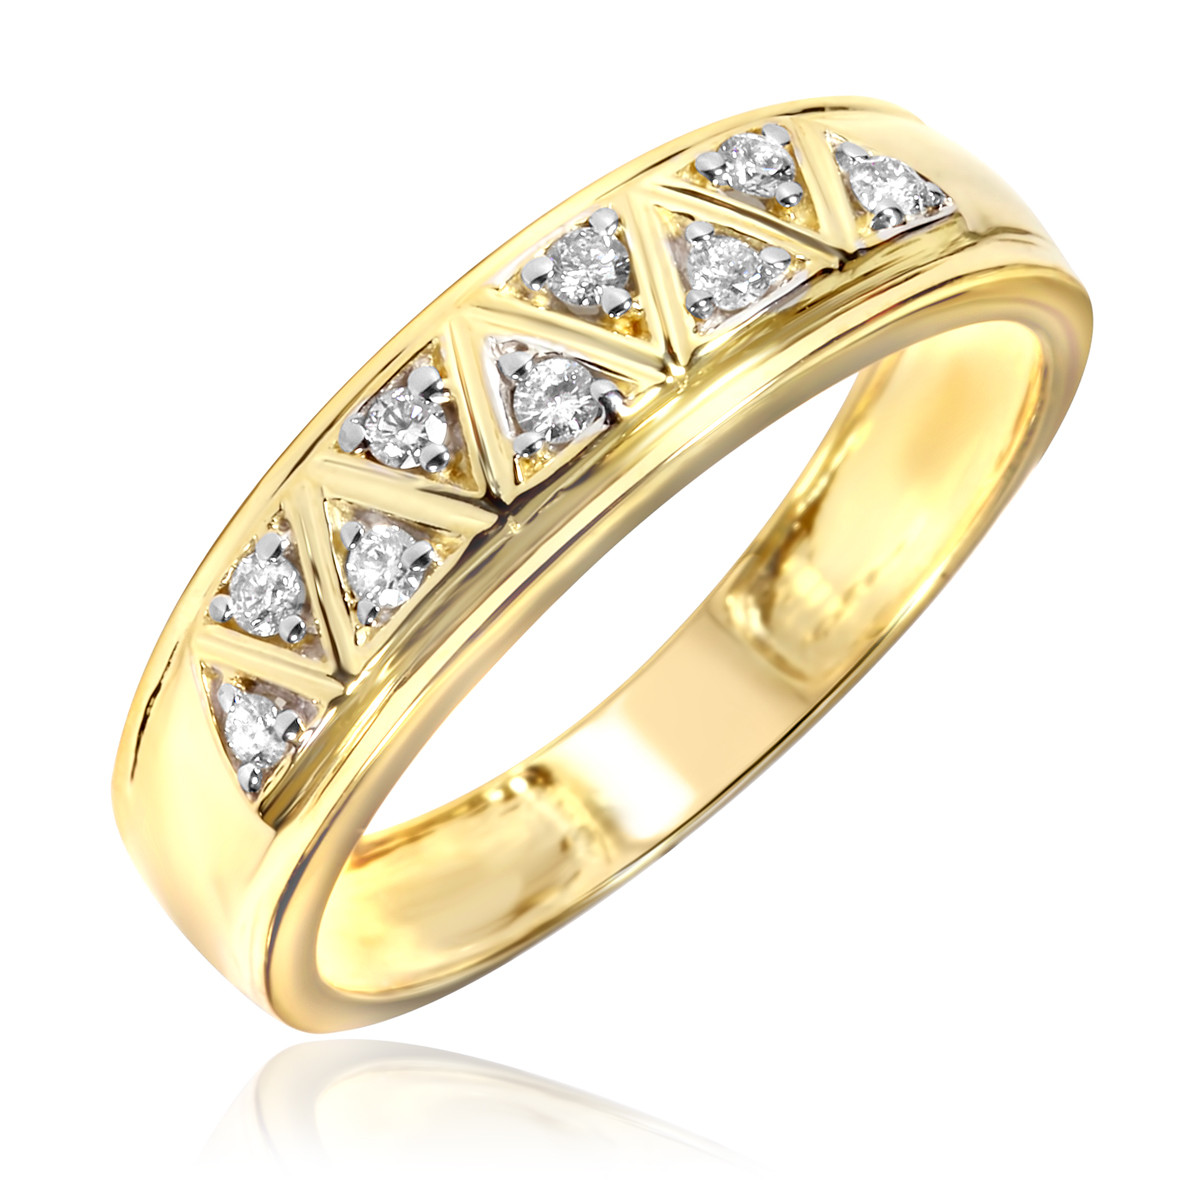 Mens Yellow Gold Diamond Rings
 1 5 Carat T W Diamond Men s Wedding Ring 14K Yellow Gold